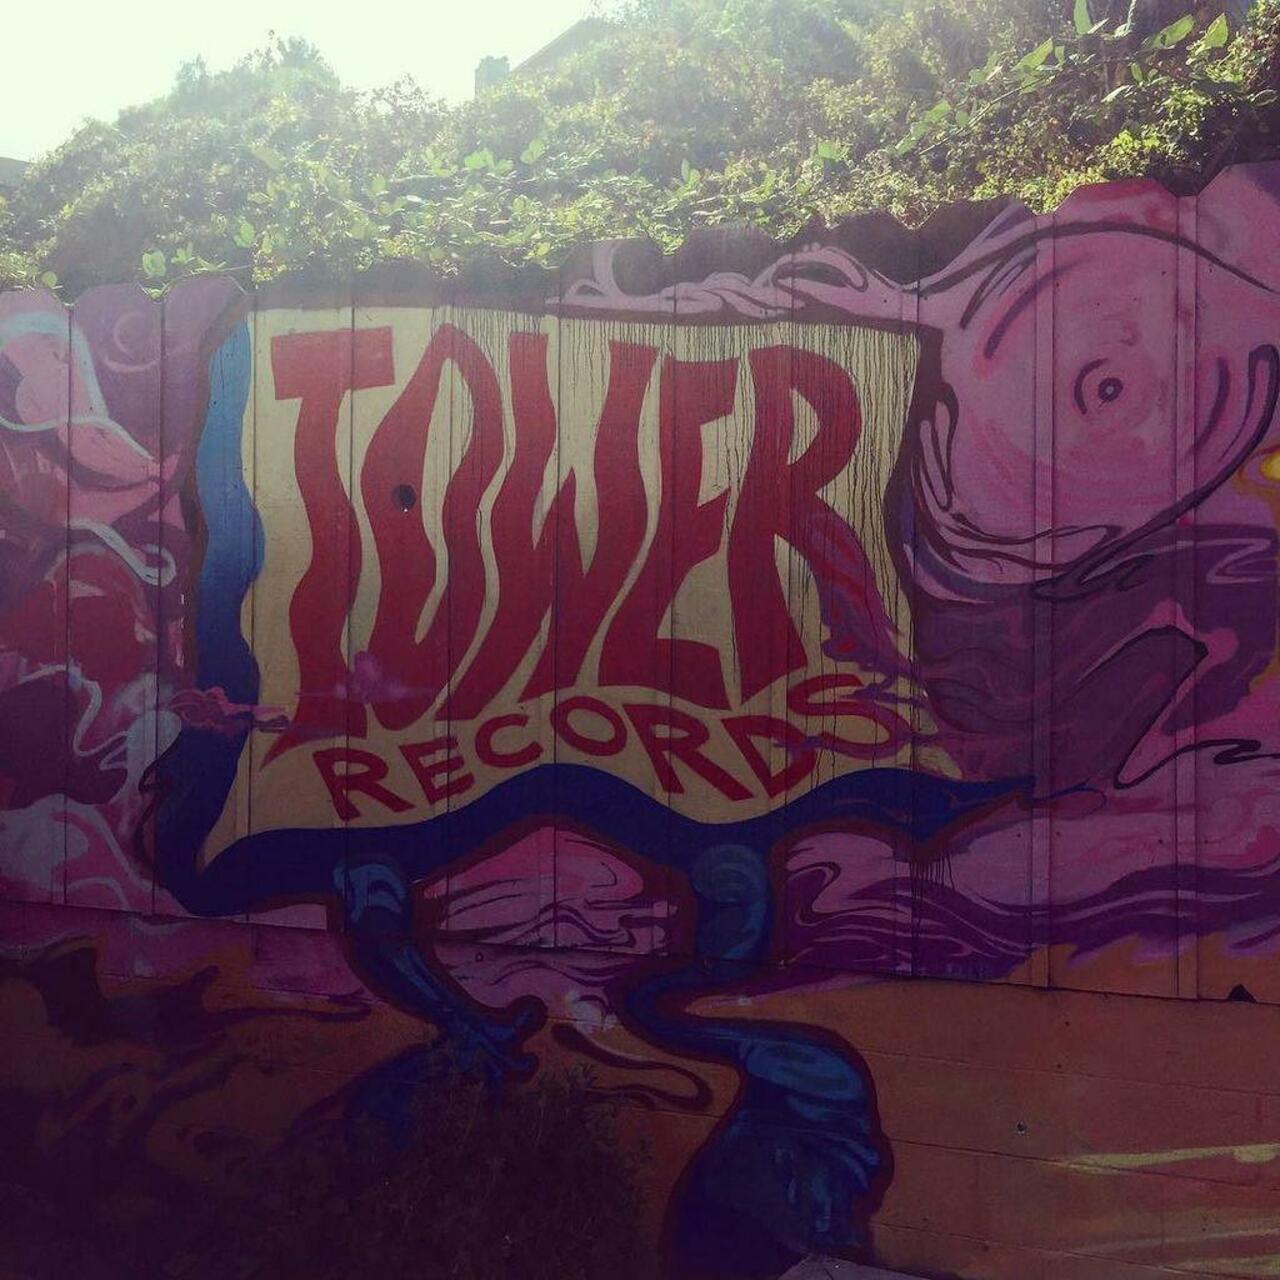 #tower #records #graffiti in #sanfrancisco #california #streetart #street #streetphotograp… http://ift.tt/1k5ZvD1 http://t.co/GLlhNmVYez